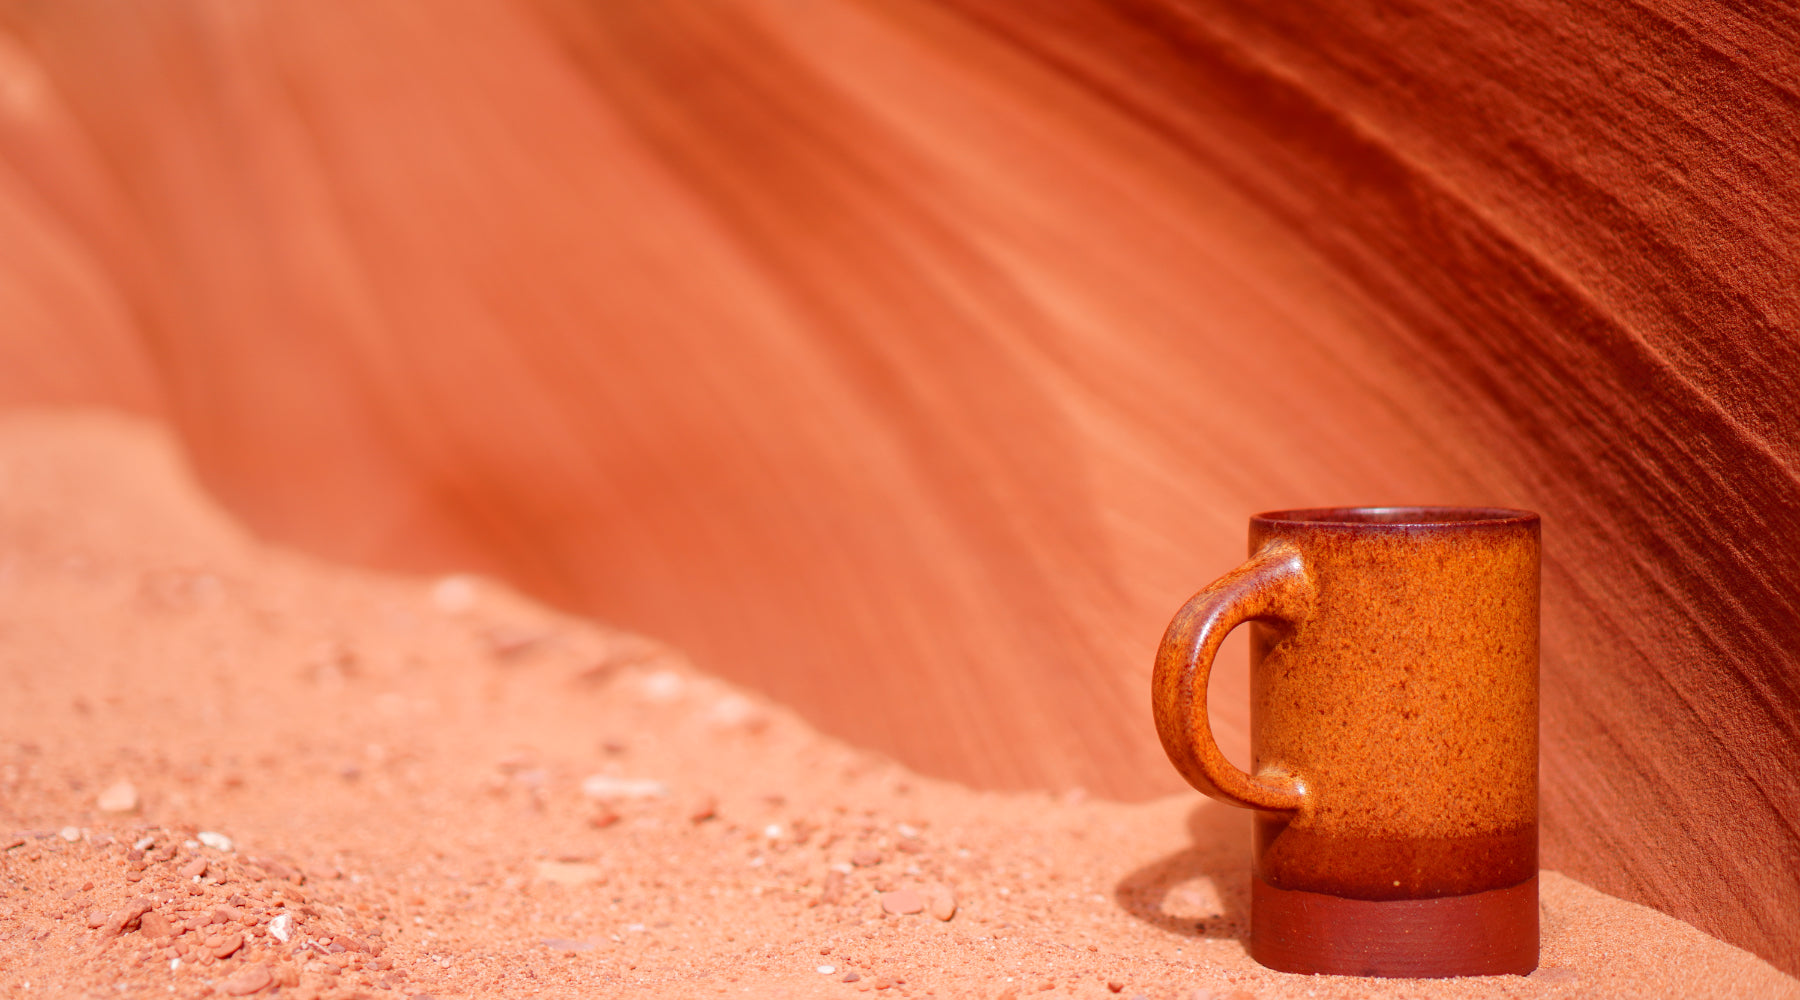 Handmade Stoneware Ceramic Mug, with Jug handle in red rock canyon walls